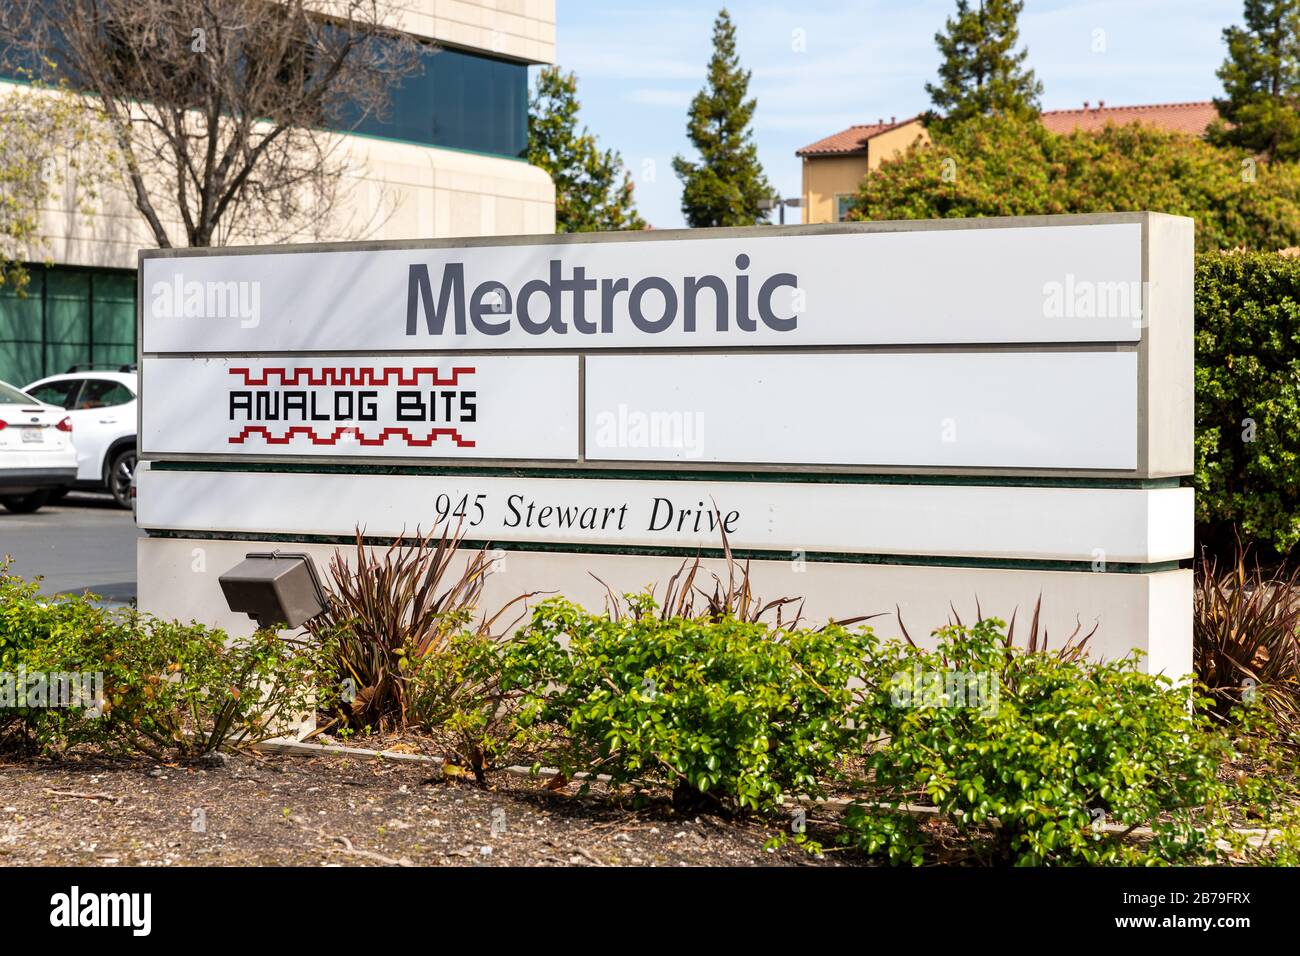 Medtronic, Analog Bits, 945 Stewart Drive, sign; Sunnyvale, California, USA Stock Photo